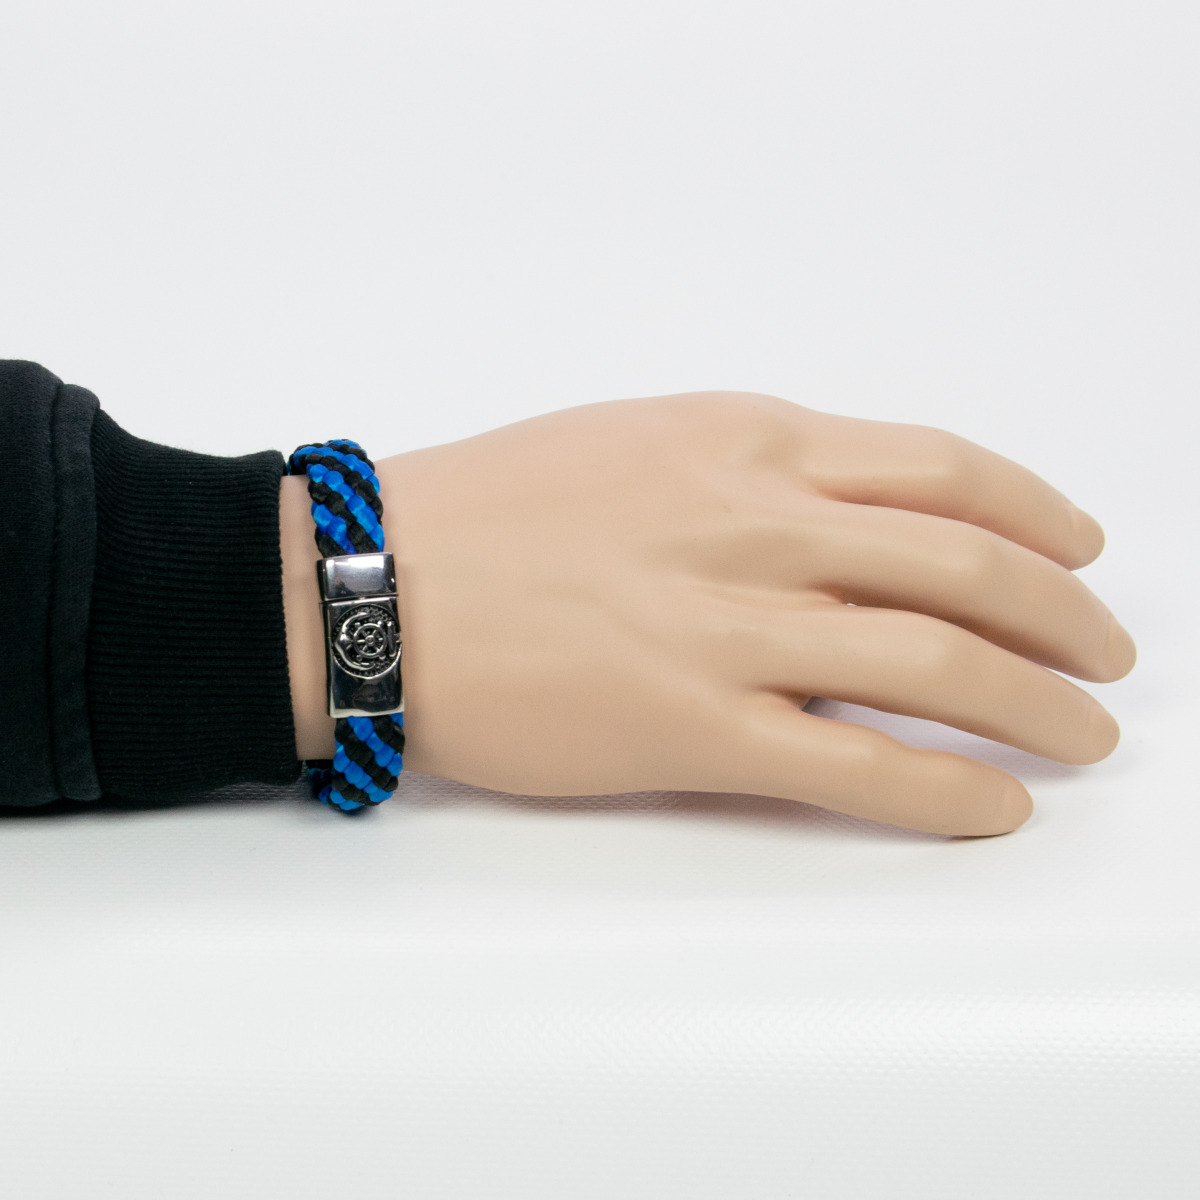 maritim ⚓ - Armband blau-schwarz⚓ Magnetverschluß -